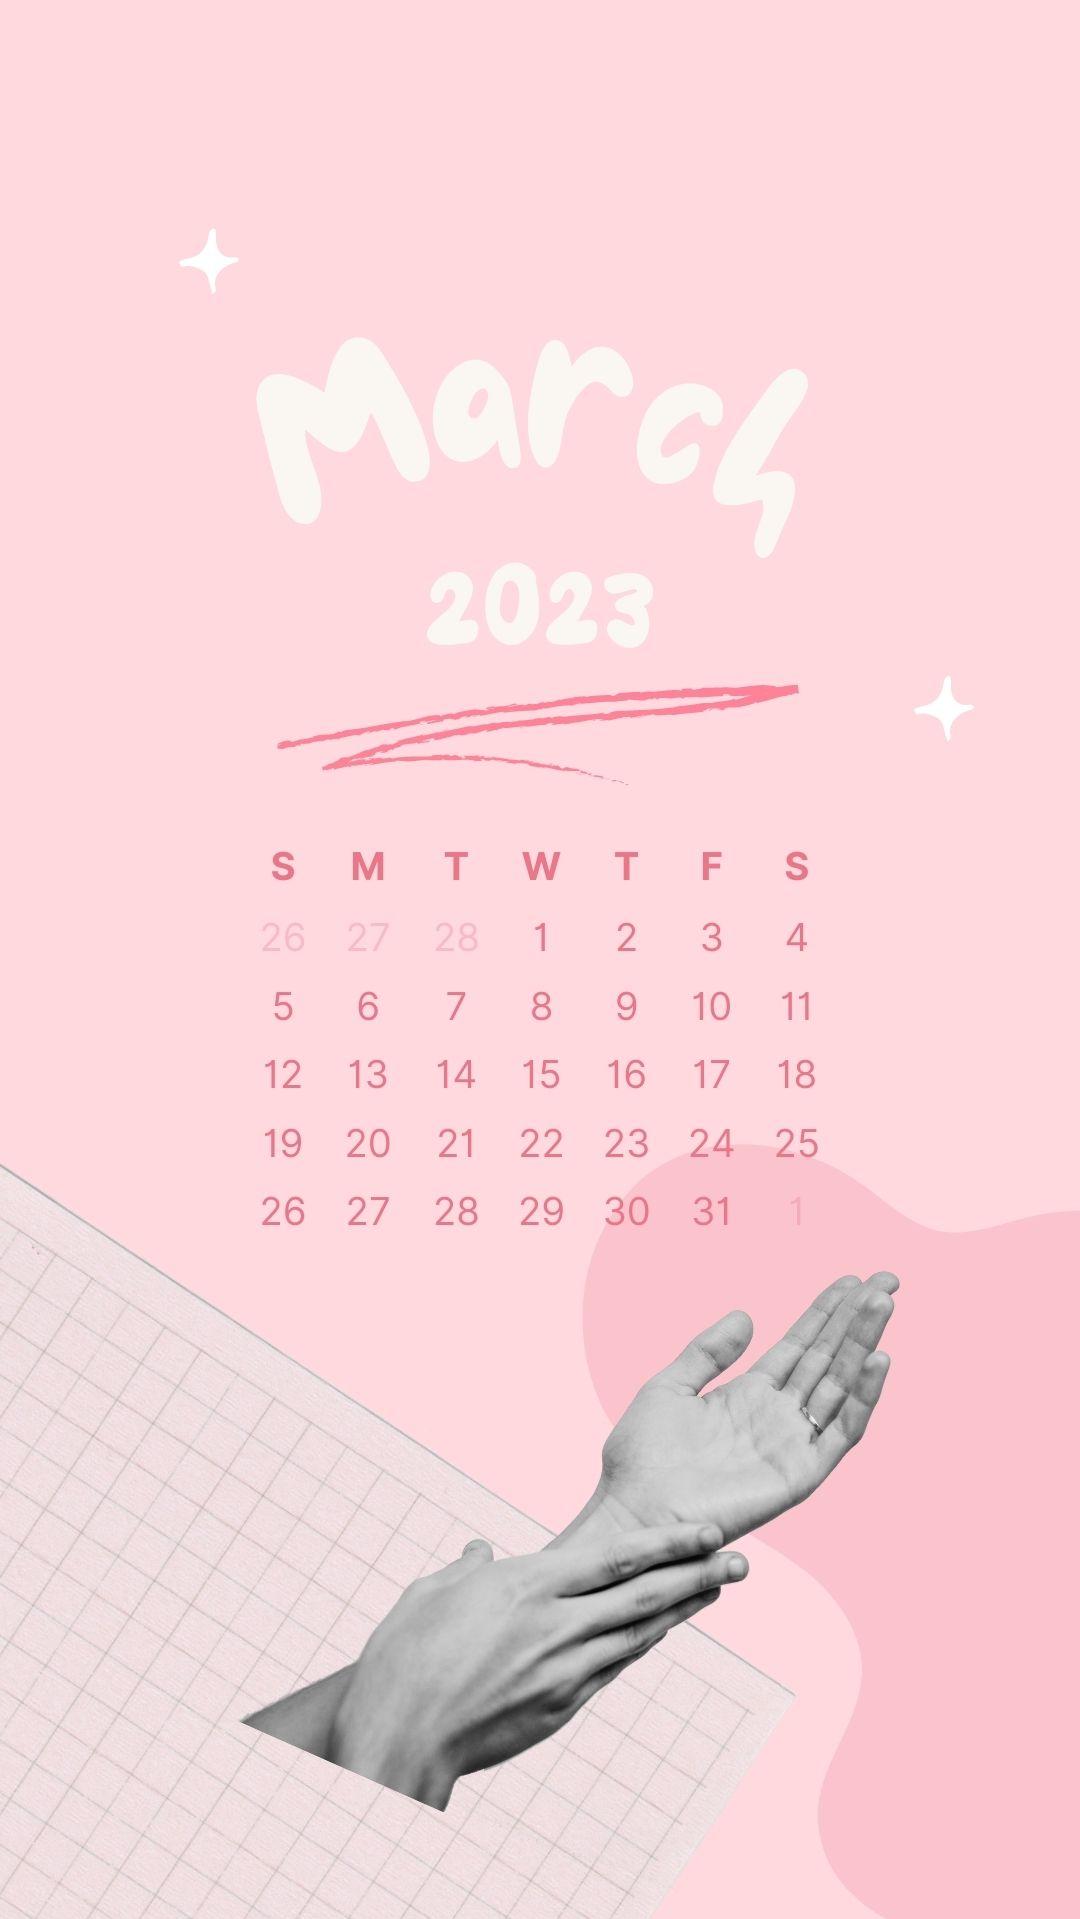 March 2023 free aesthetic calendar wallpaper lock screen